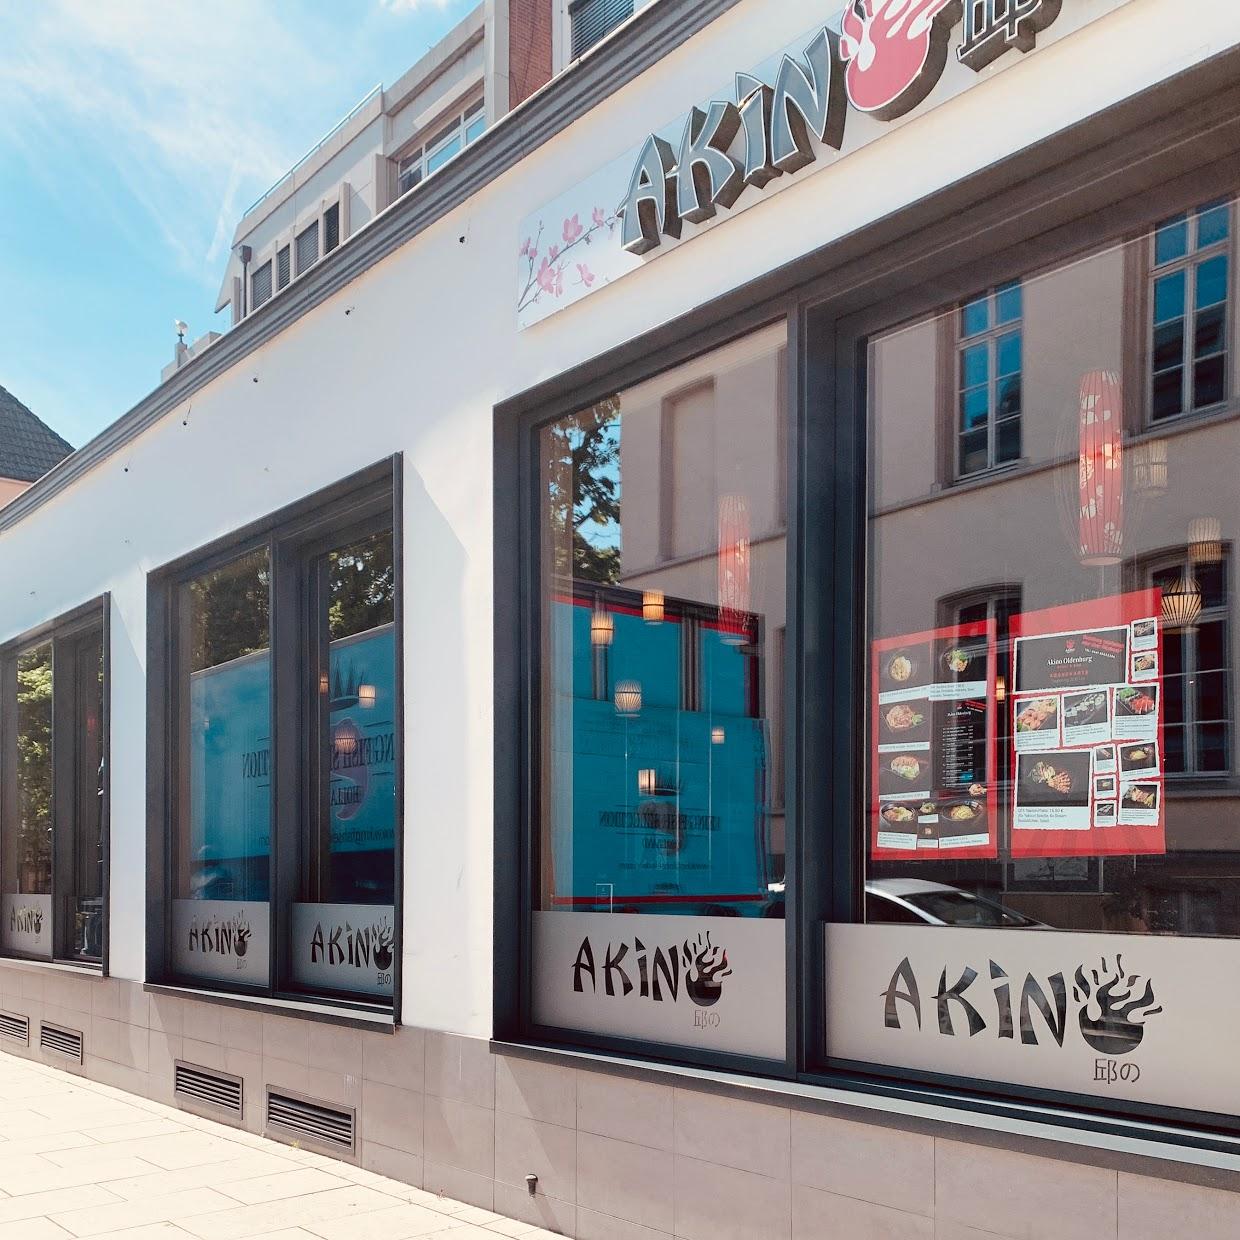 Restaurant "Akino" in  Oldenburg